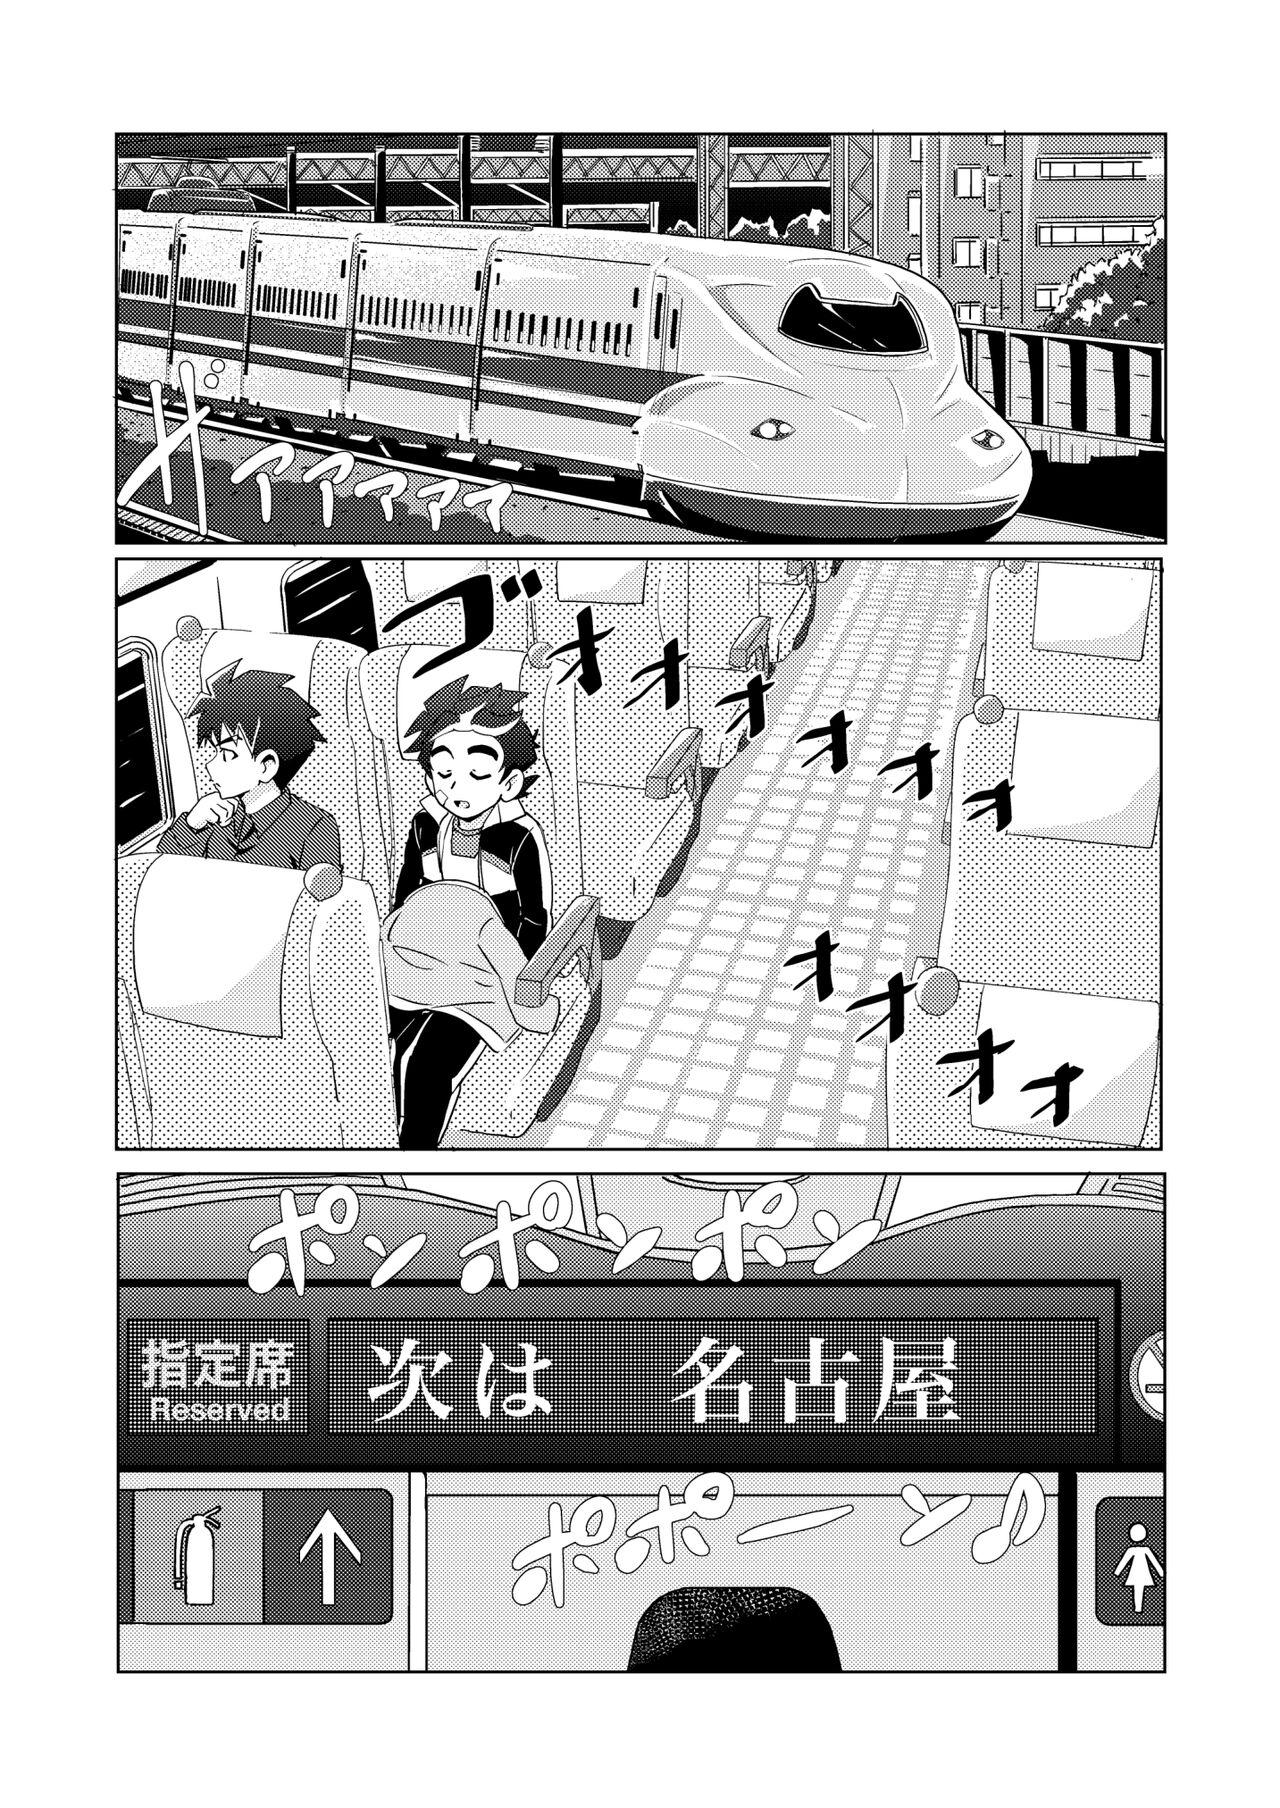 Roleplay DRAGON BROTHERS - Shinkansen henkei robo shinkalion Alternative - Page 3